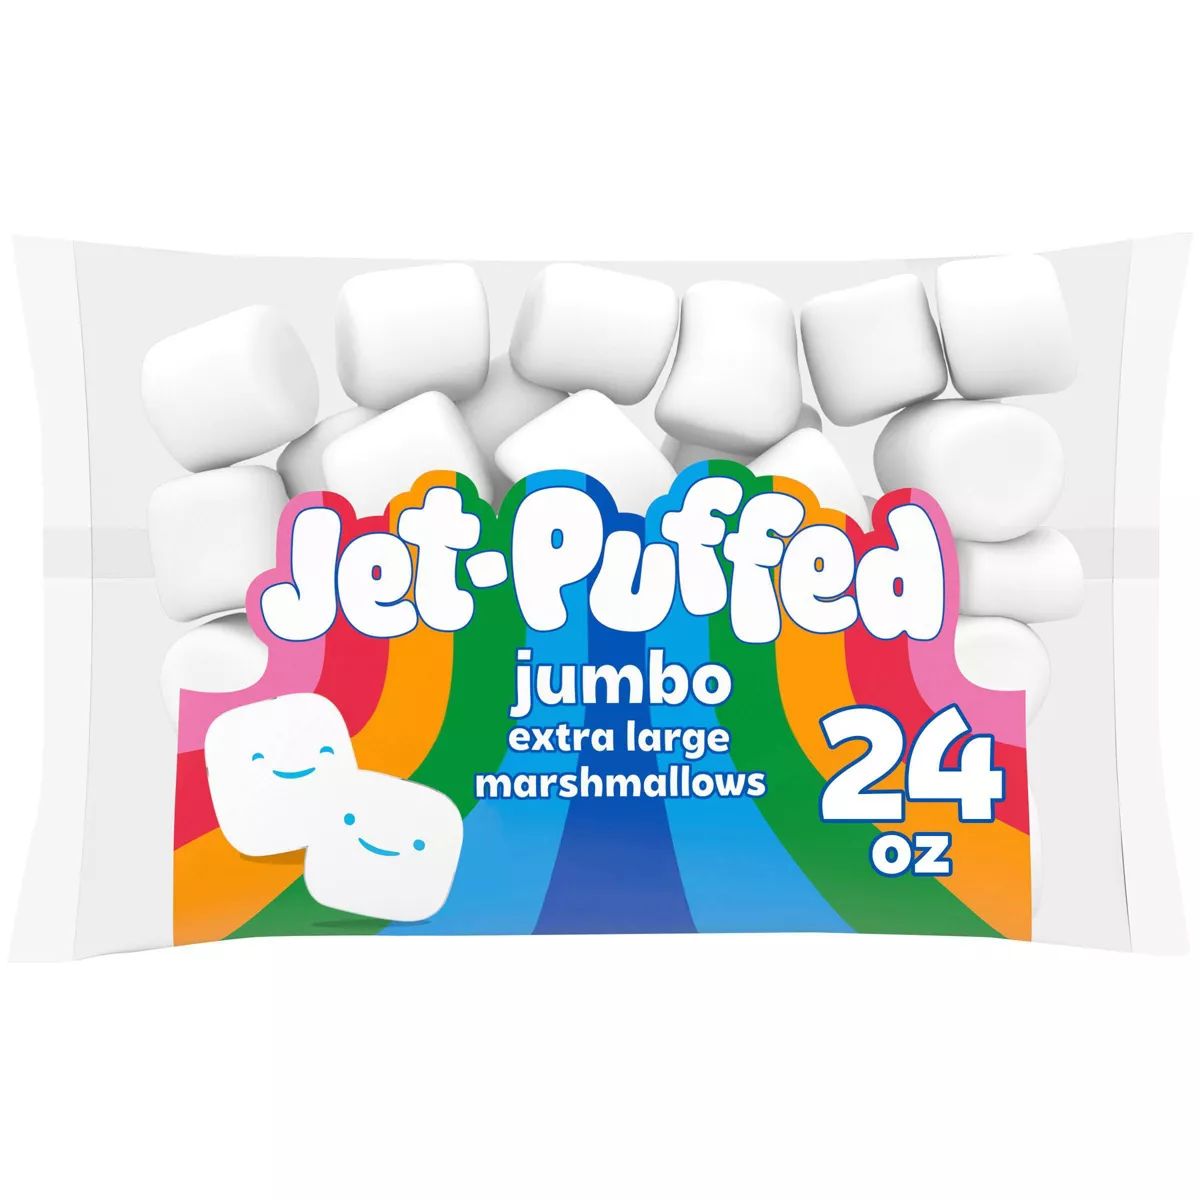 Kraft Jet-Puffed Jumbo Extra Large Marshmallows - 24oz | Target